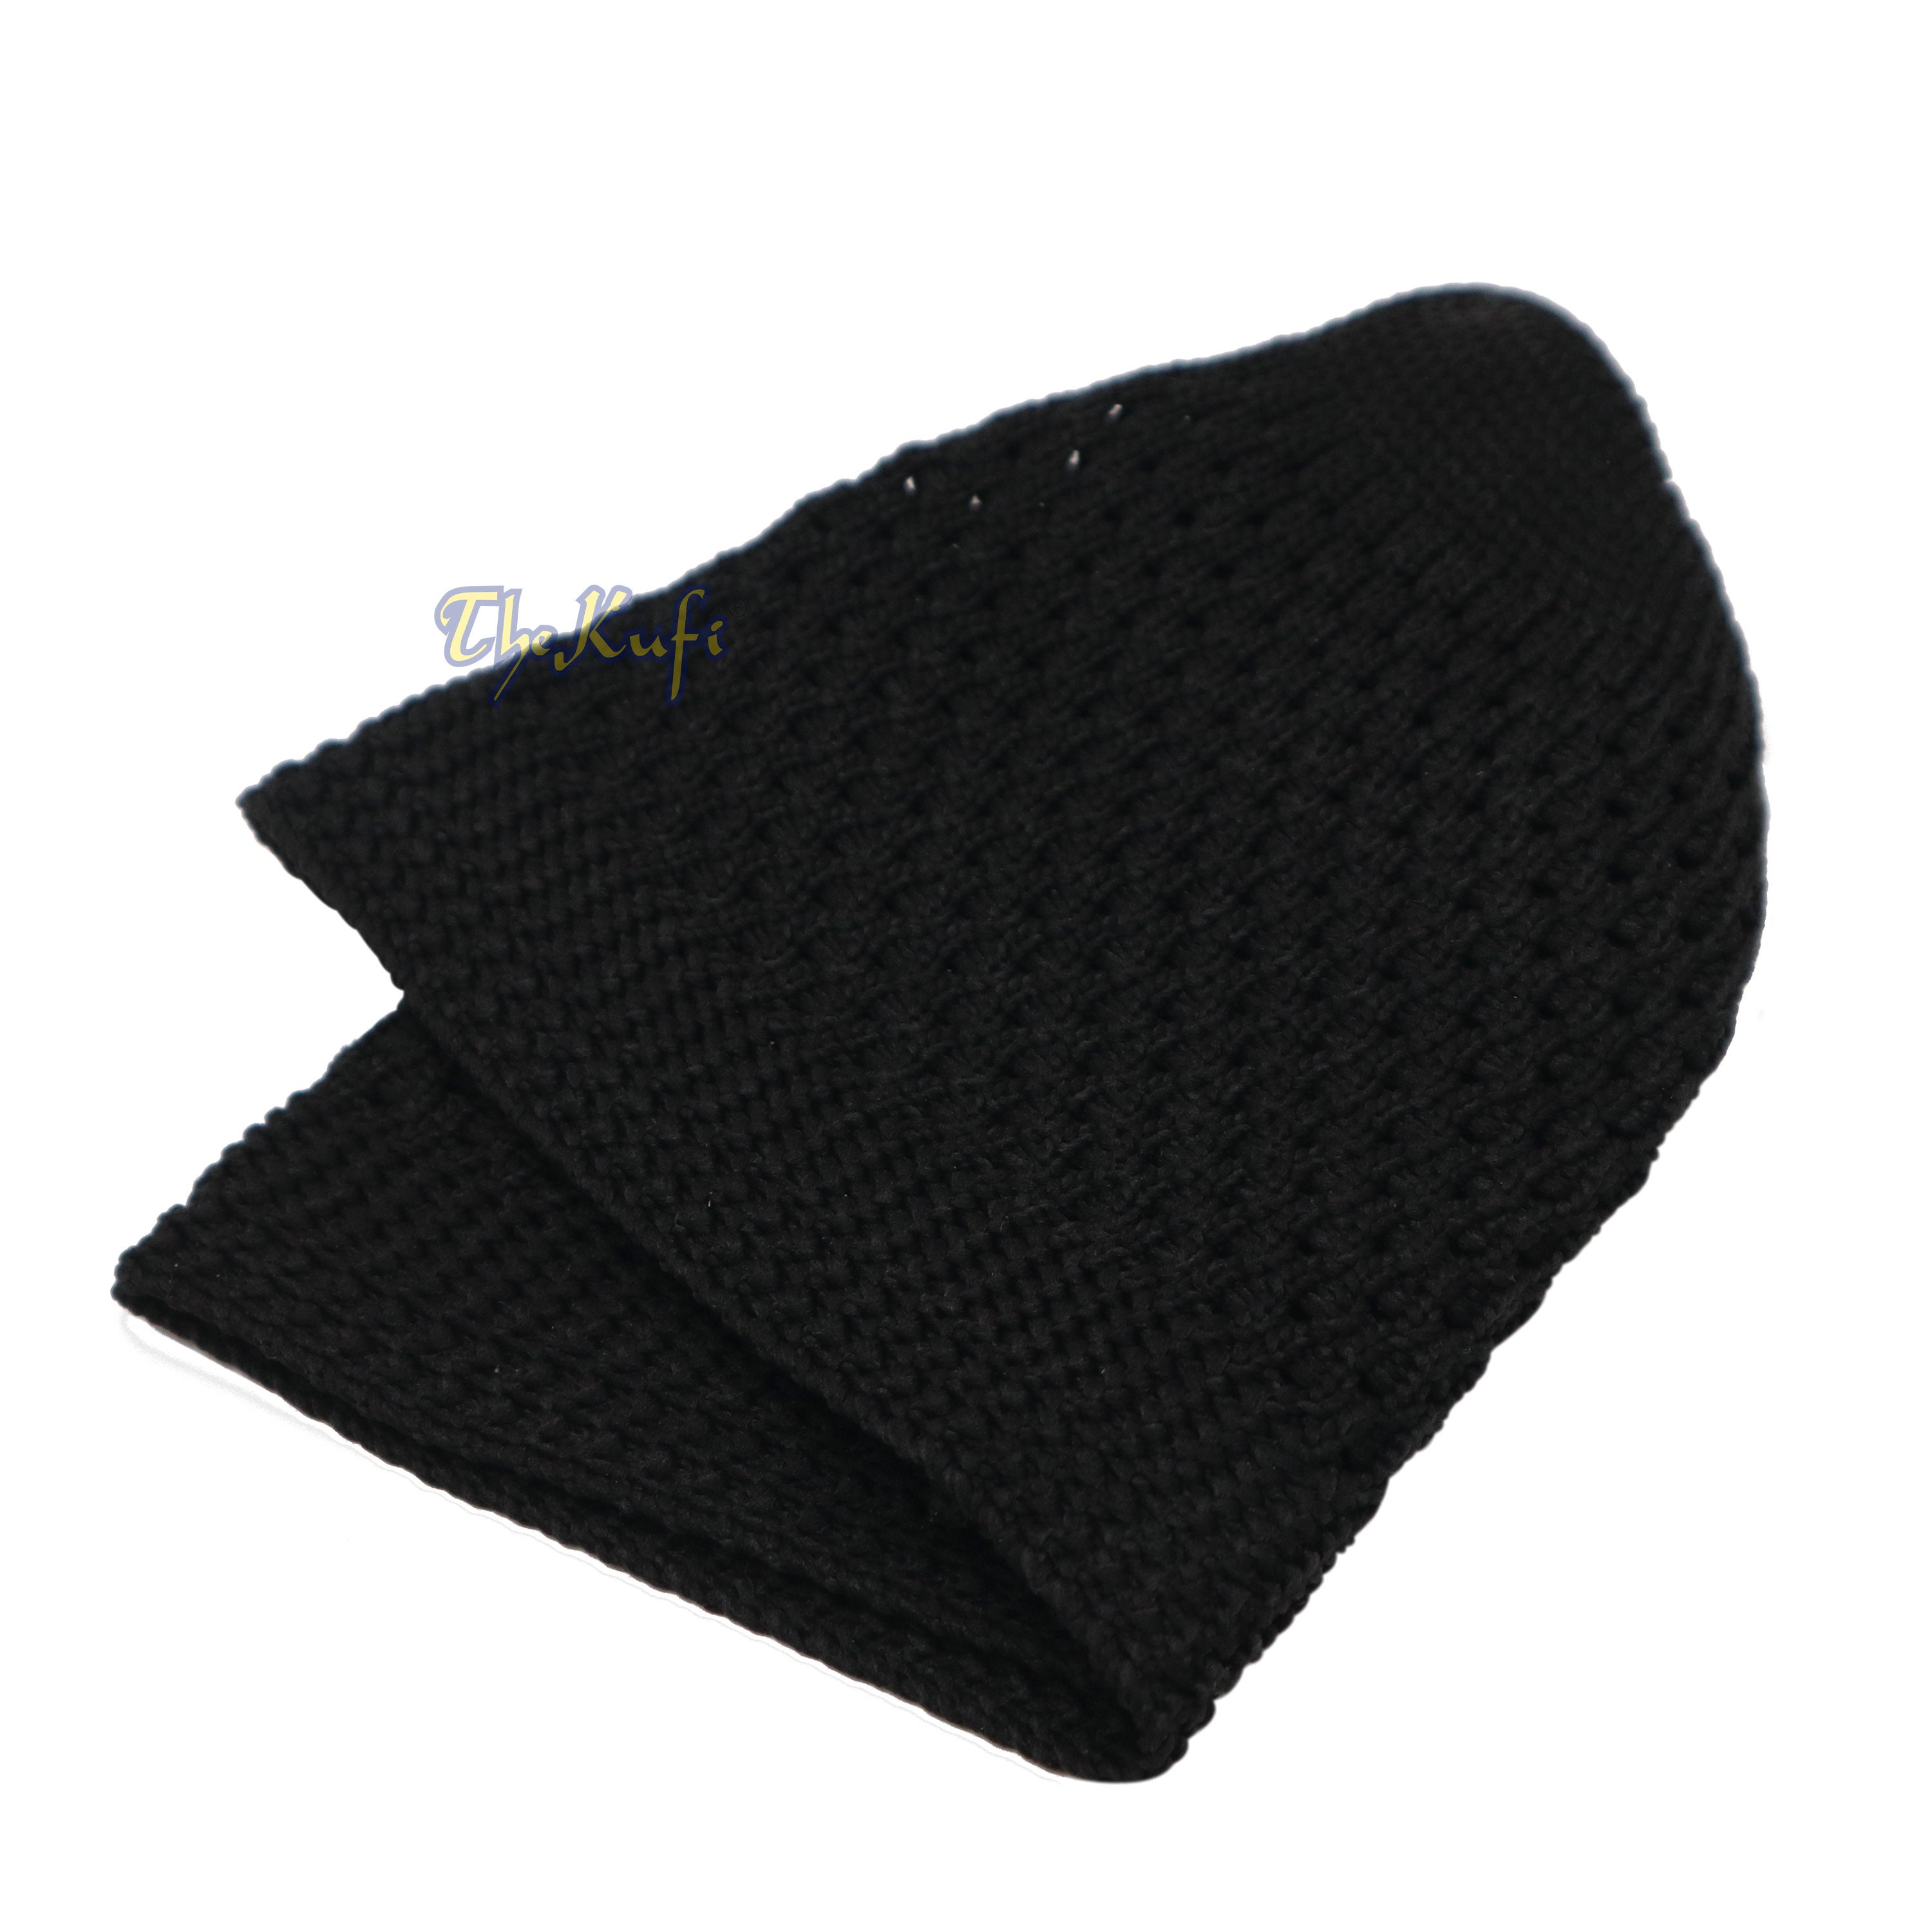 Black Nylon Kufi Skull Cap Open-weave Knit Stretchy Headcover Hat Muslim  Prayer Skullie Takke Topi Beanie XS up to 4X Sizes FREE MISWAK - Etsy